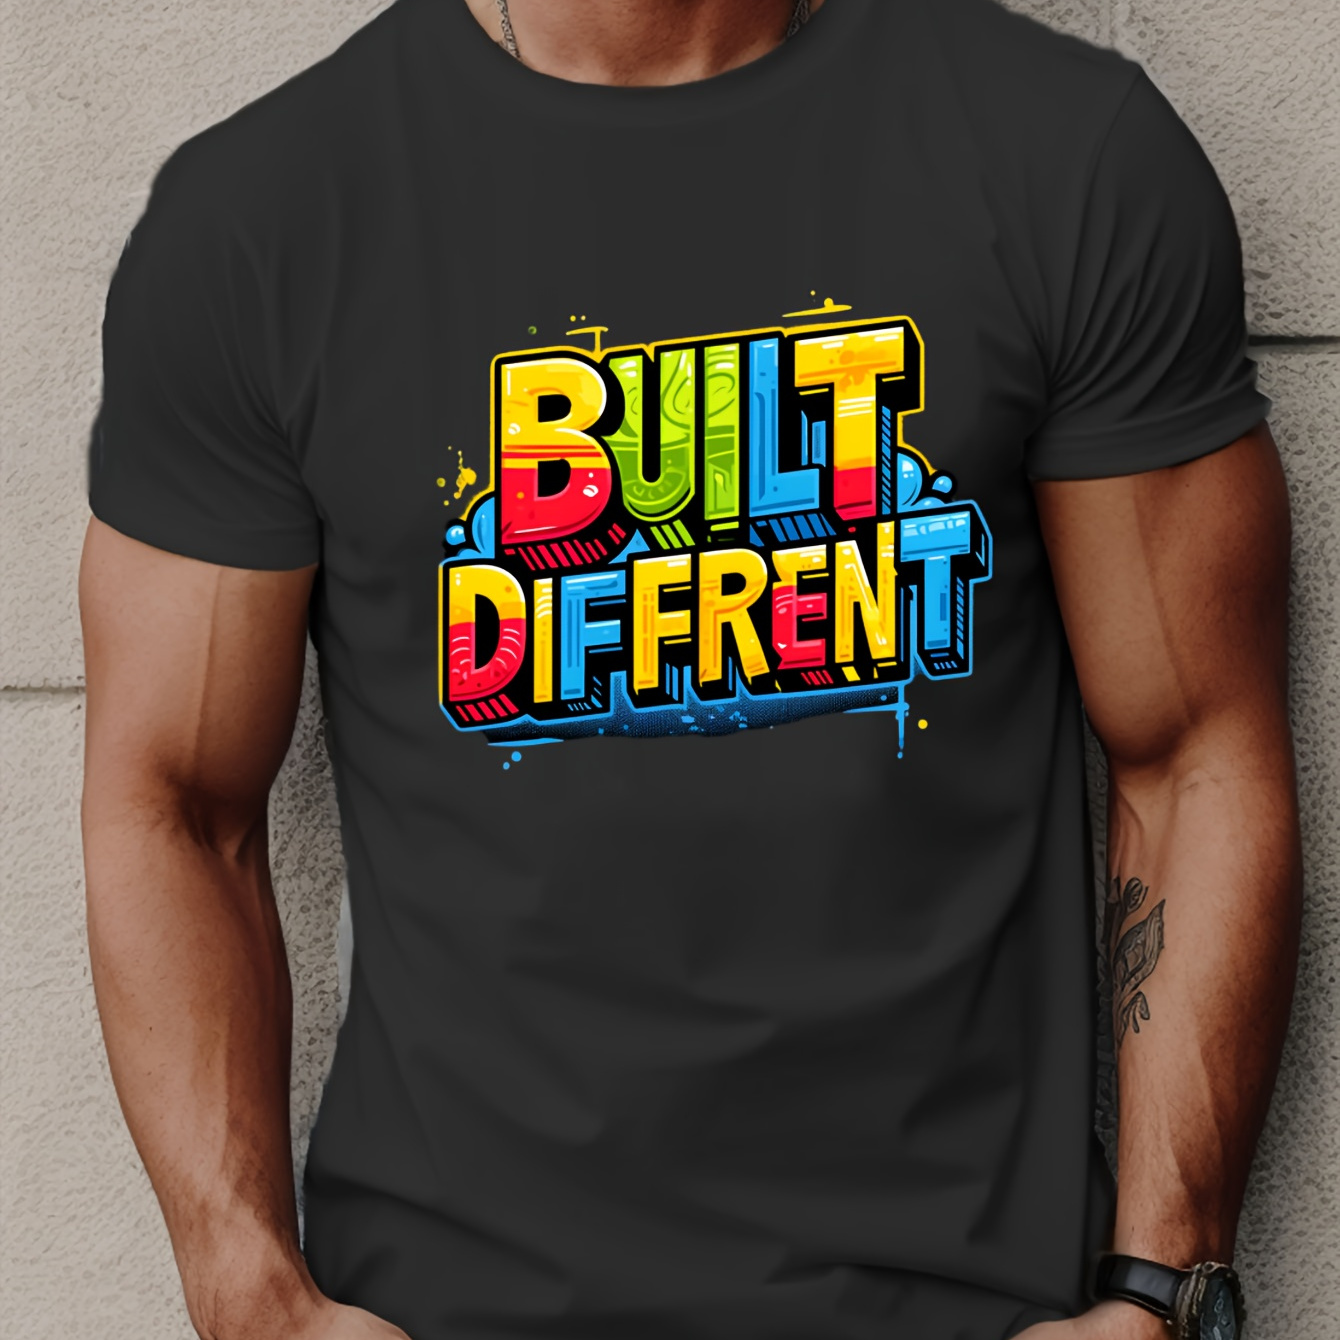 

Built Different Letter Print Tee Shirt, Tees For Men, Casual Short Sleeve T-shirt For Summer